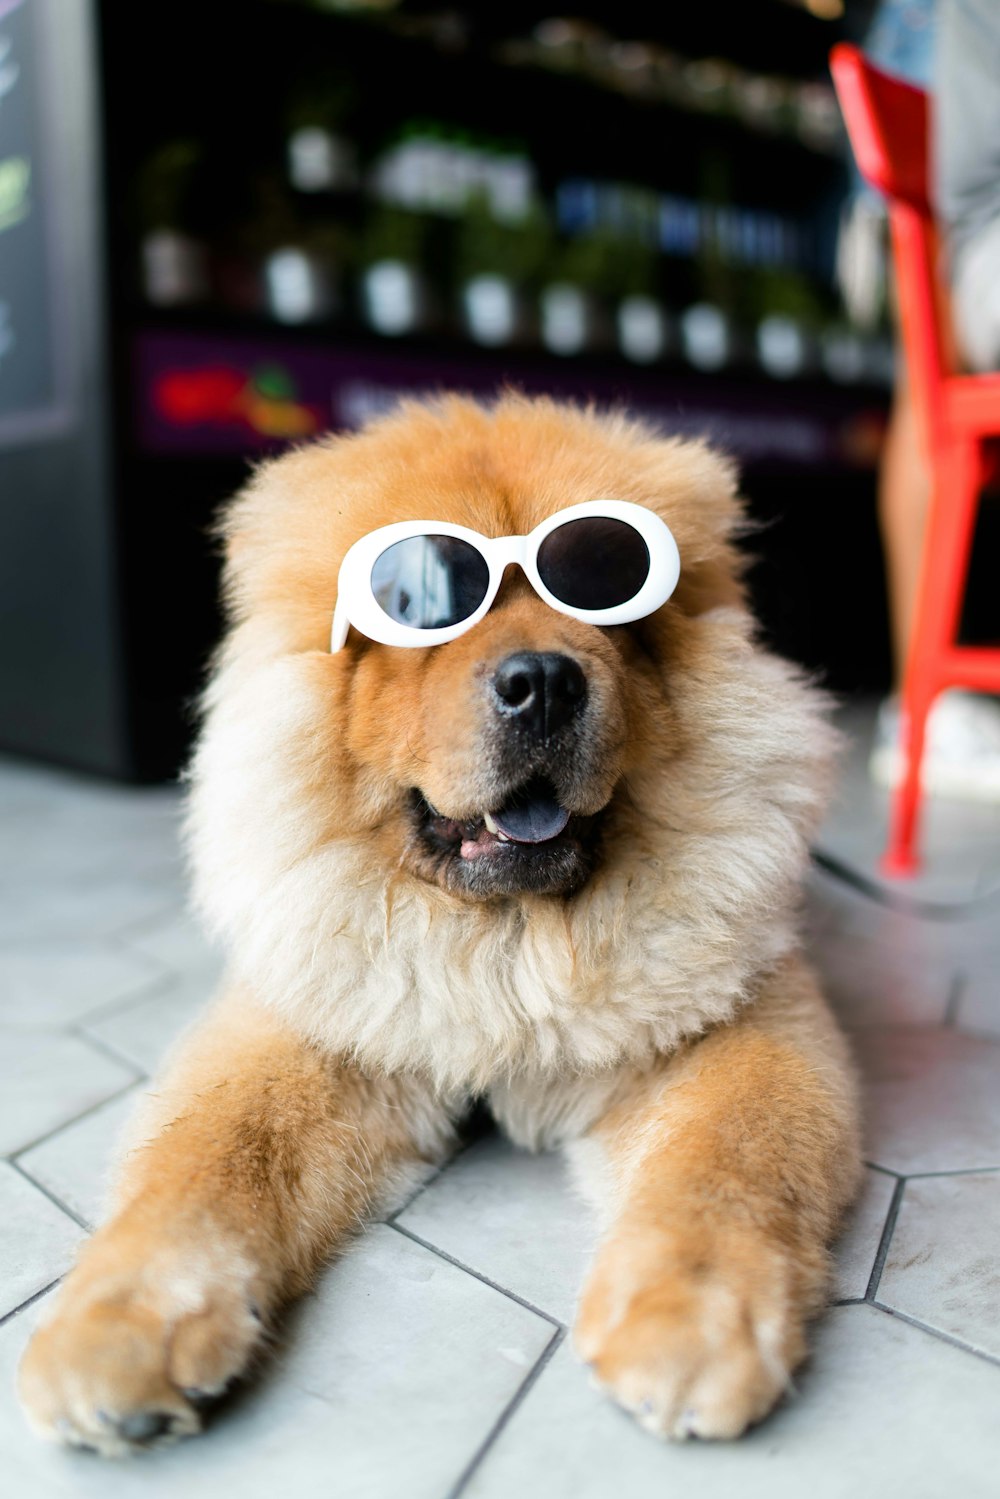 30k+ Funny Pet Pictures | Download Free Images on Unsplash